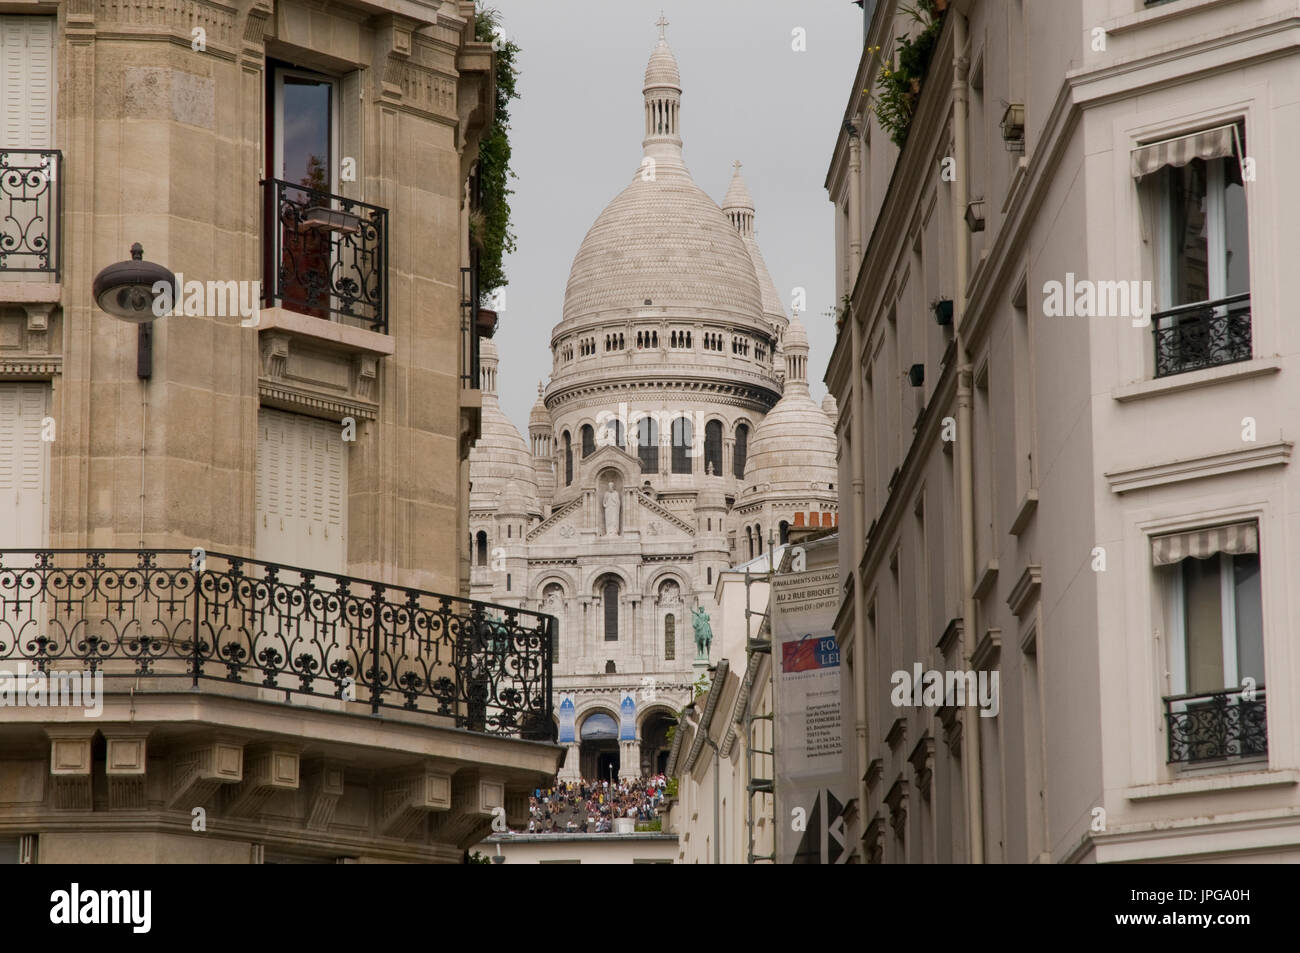 The basilica of the Sacred Heart of Paris (Sacré Coeur) seen in between houses on Boulevard de Rochechouart, Montmartre, Paris, France. Stock Photo